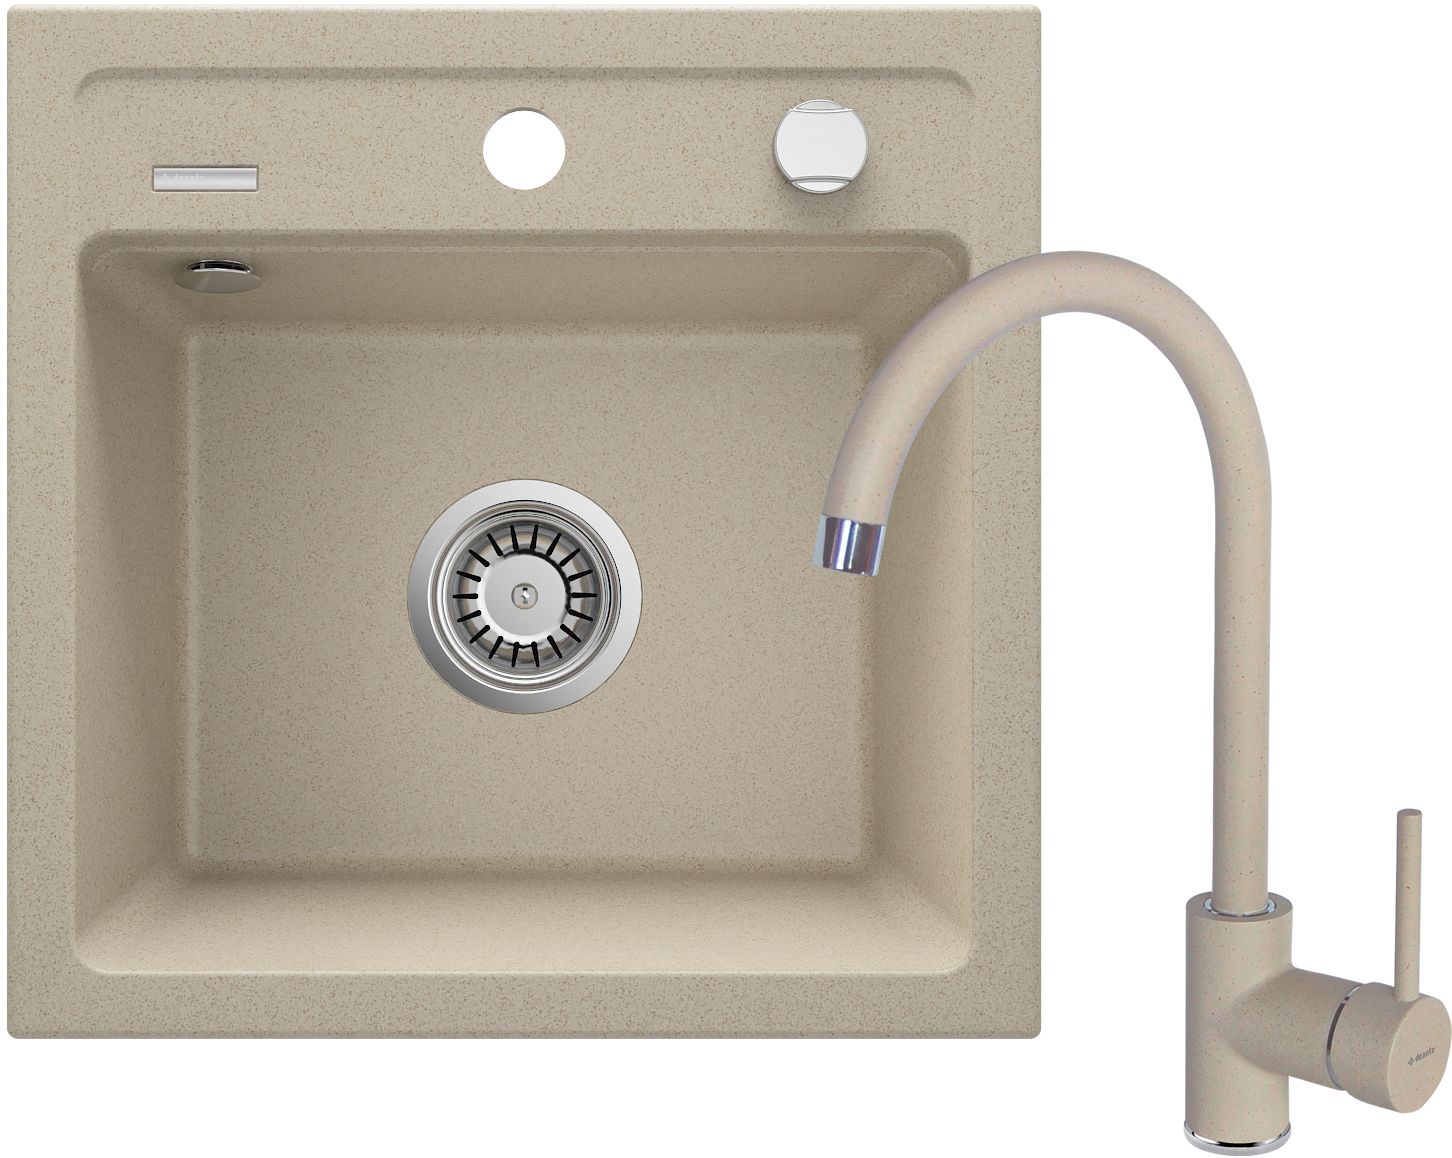 Lavello in granito con rubinetto, 1-vaschetta - ZQZA7103 - Główne zdjęcie produktowe